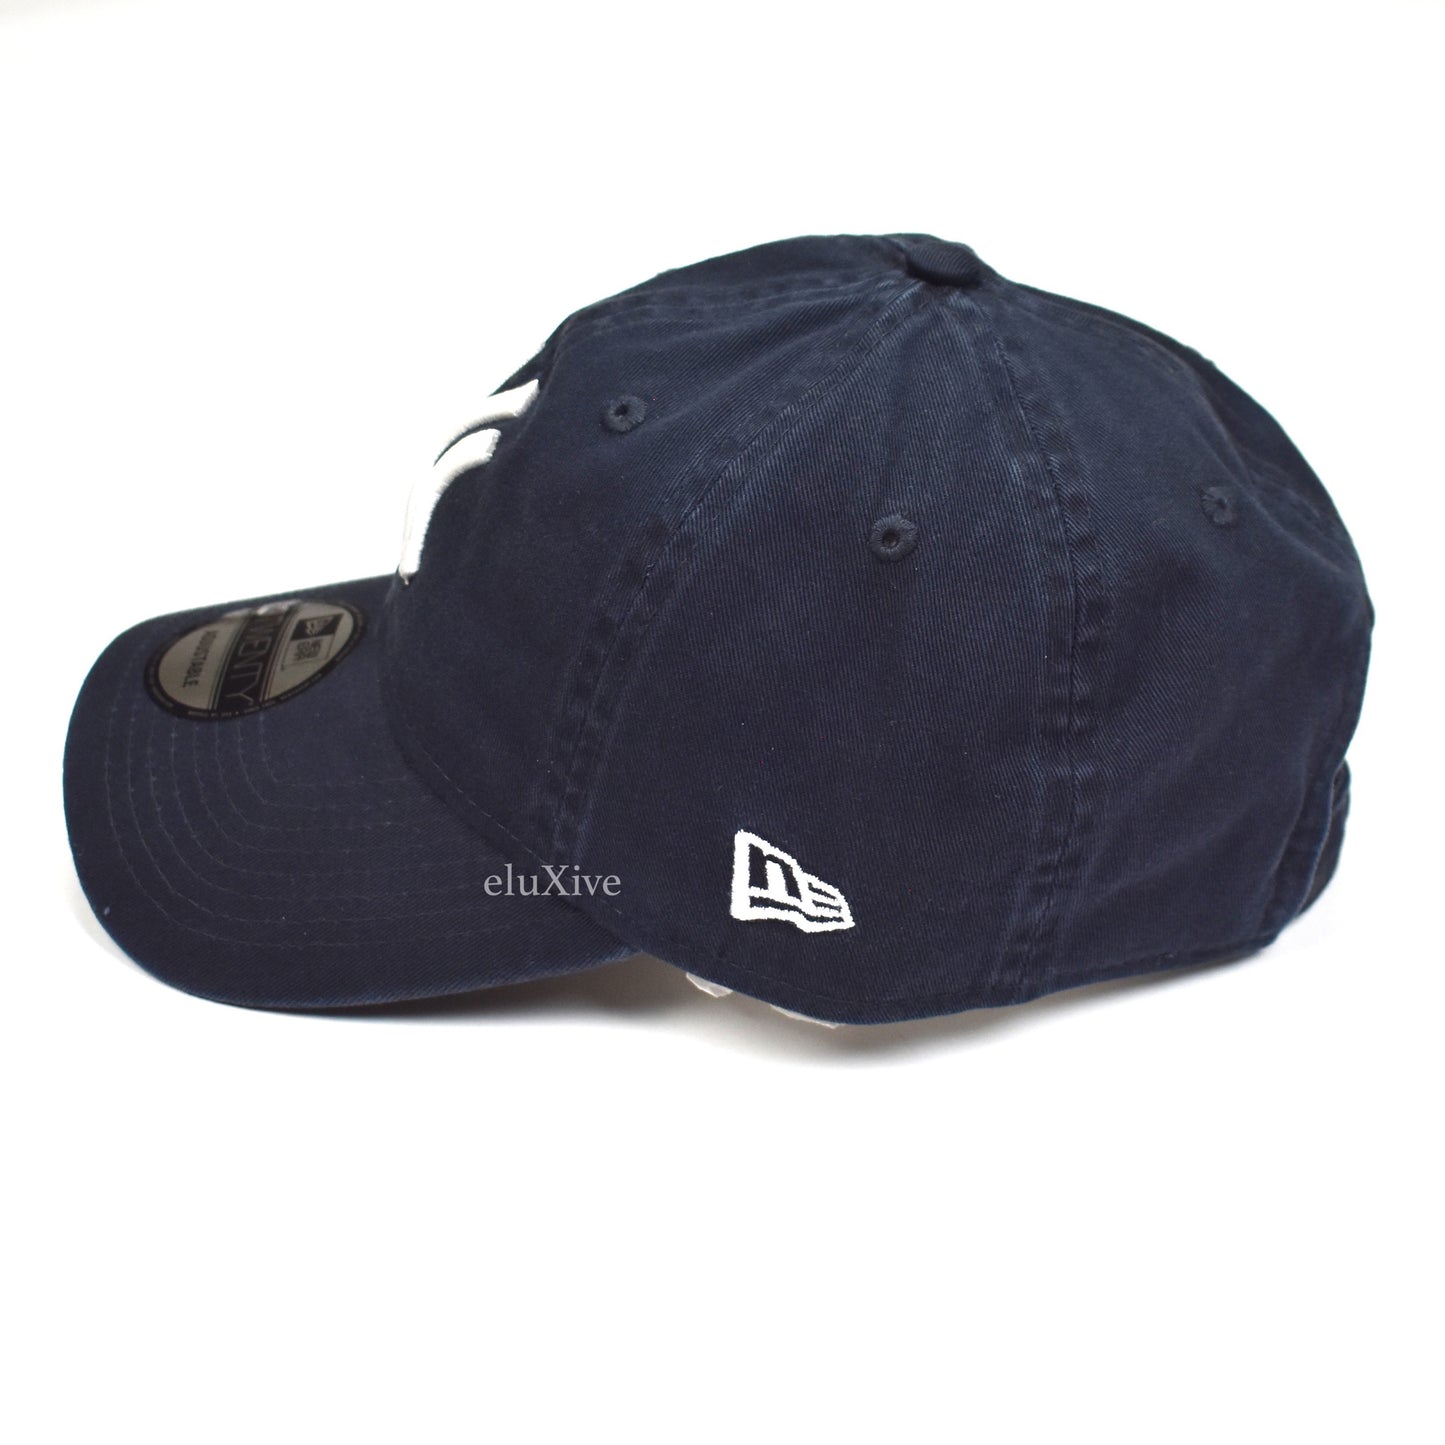 New Era - MoMA Edition Yankees Adjustable Hat (Navy)